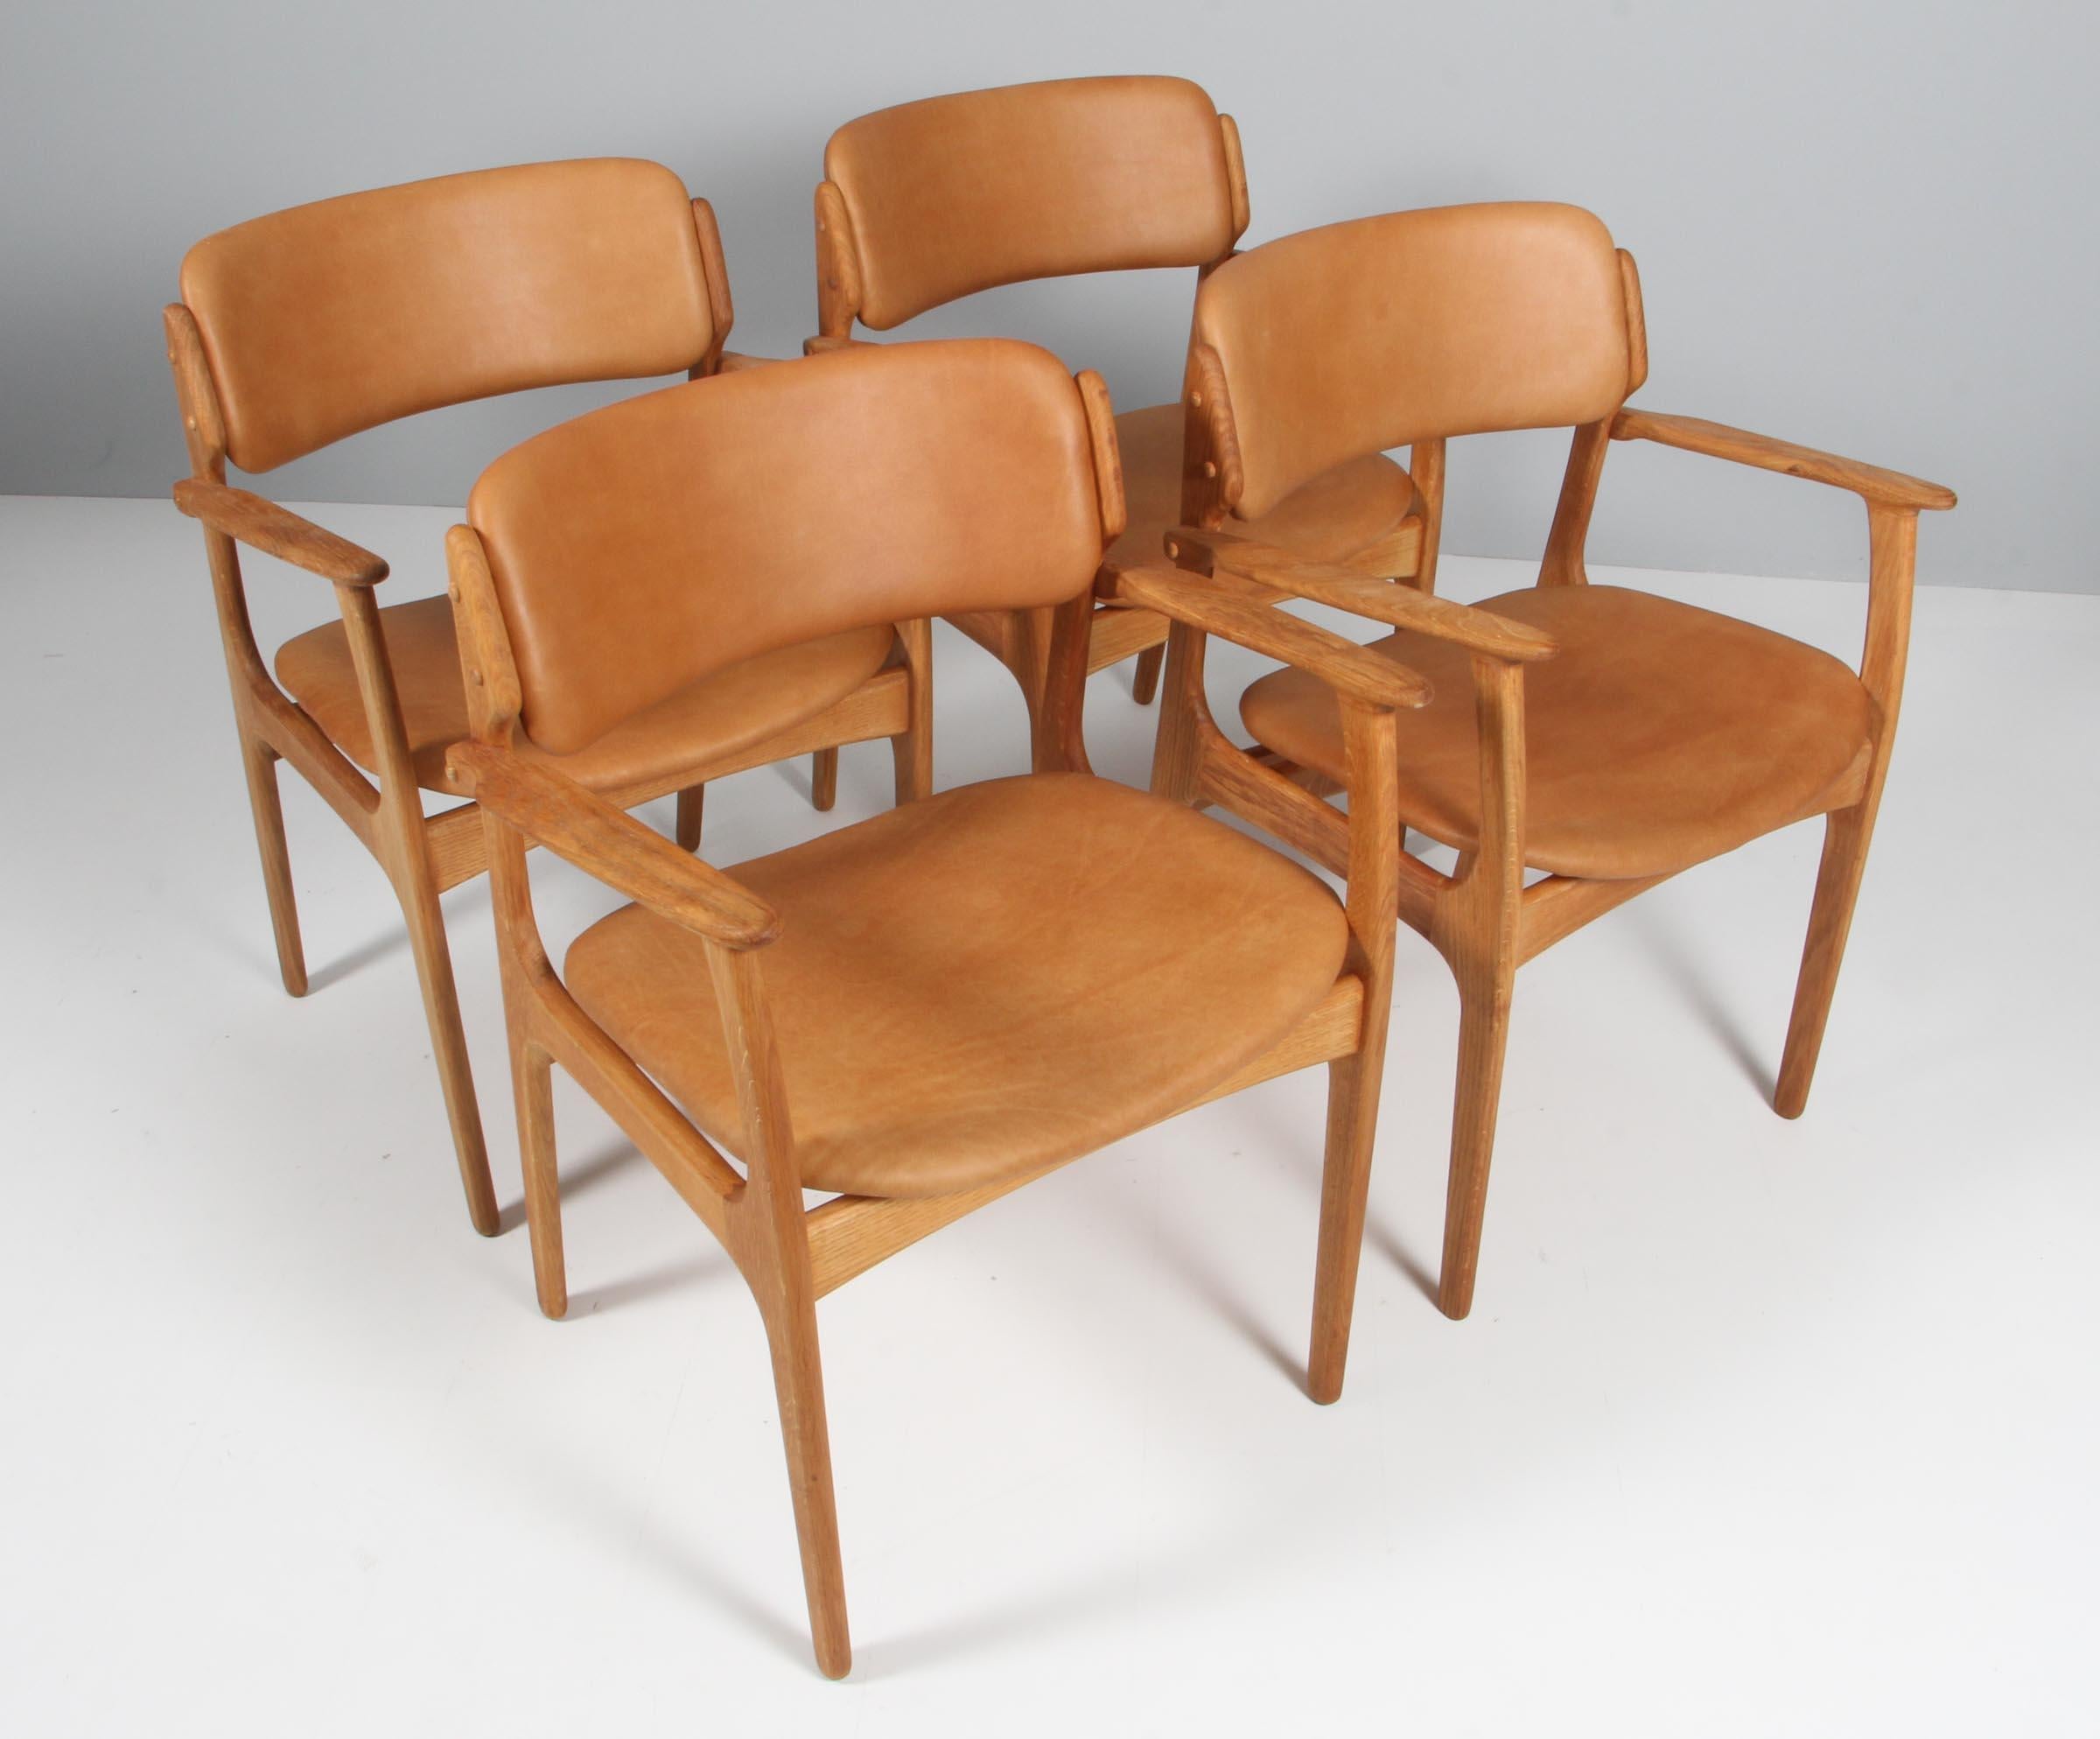 Erik Buch armchair frame of oak.

New upholstered with vintage tan aniline leather.

Model 50 made by Odense Maskinsnedkeri, Denmark.